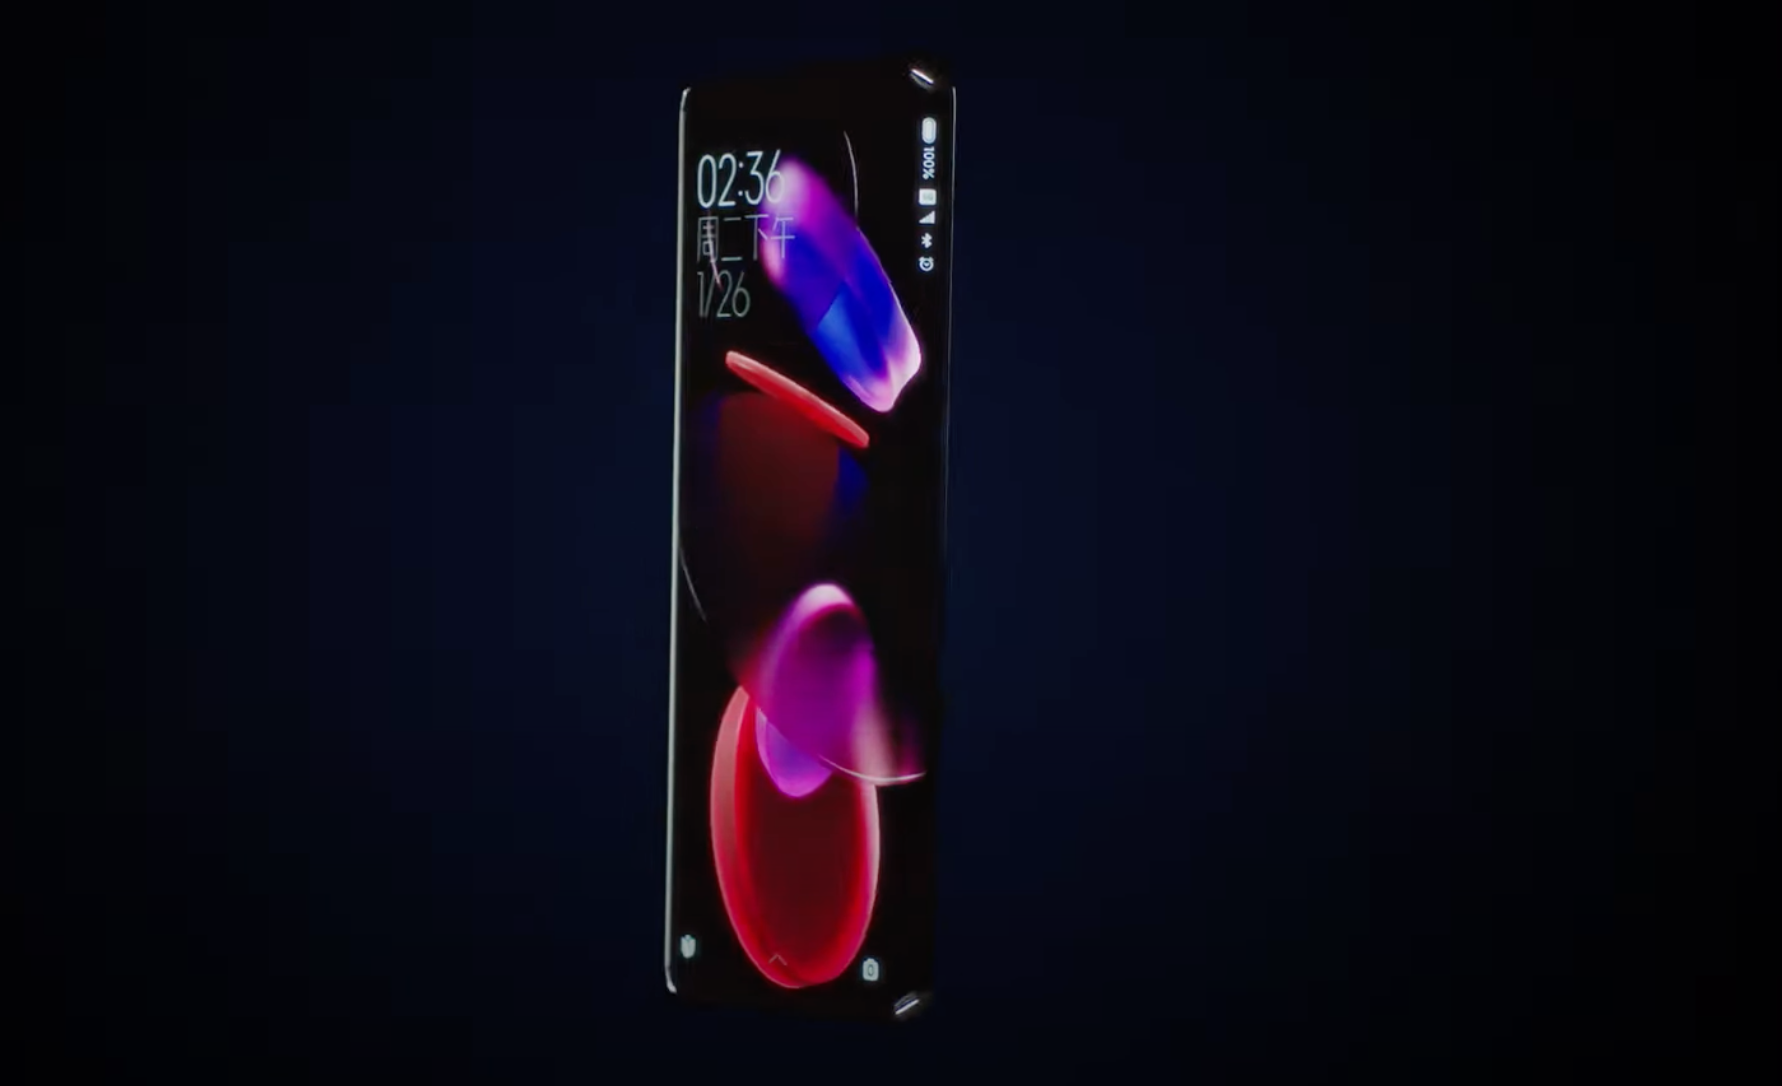 Xiaomi waterfall phone concept